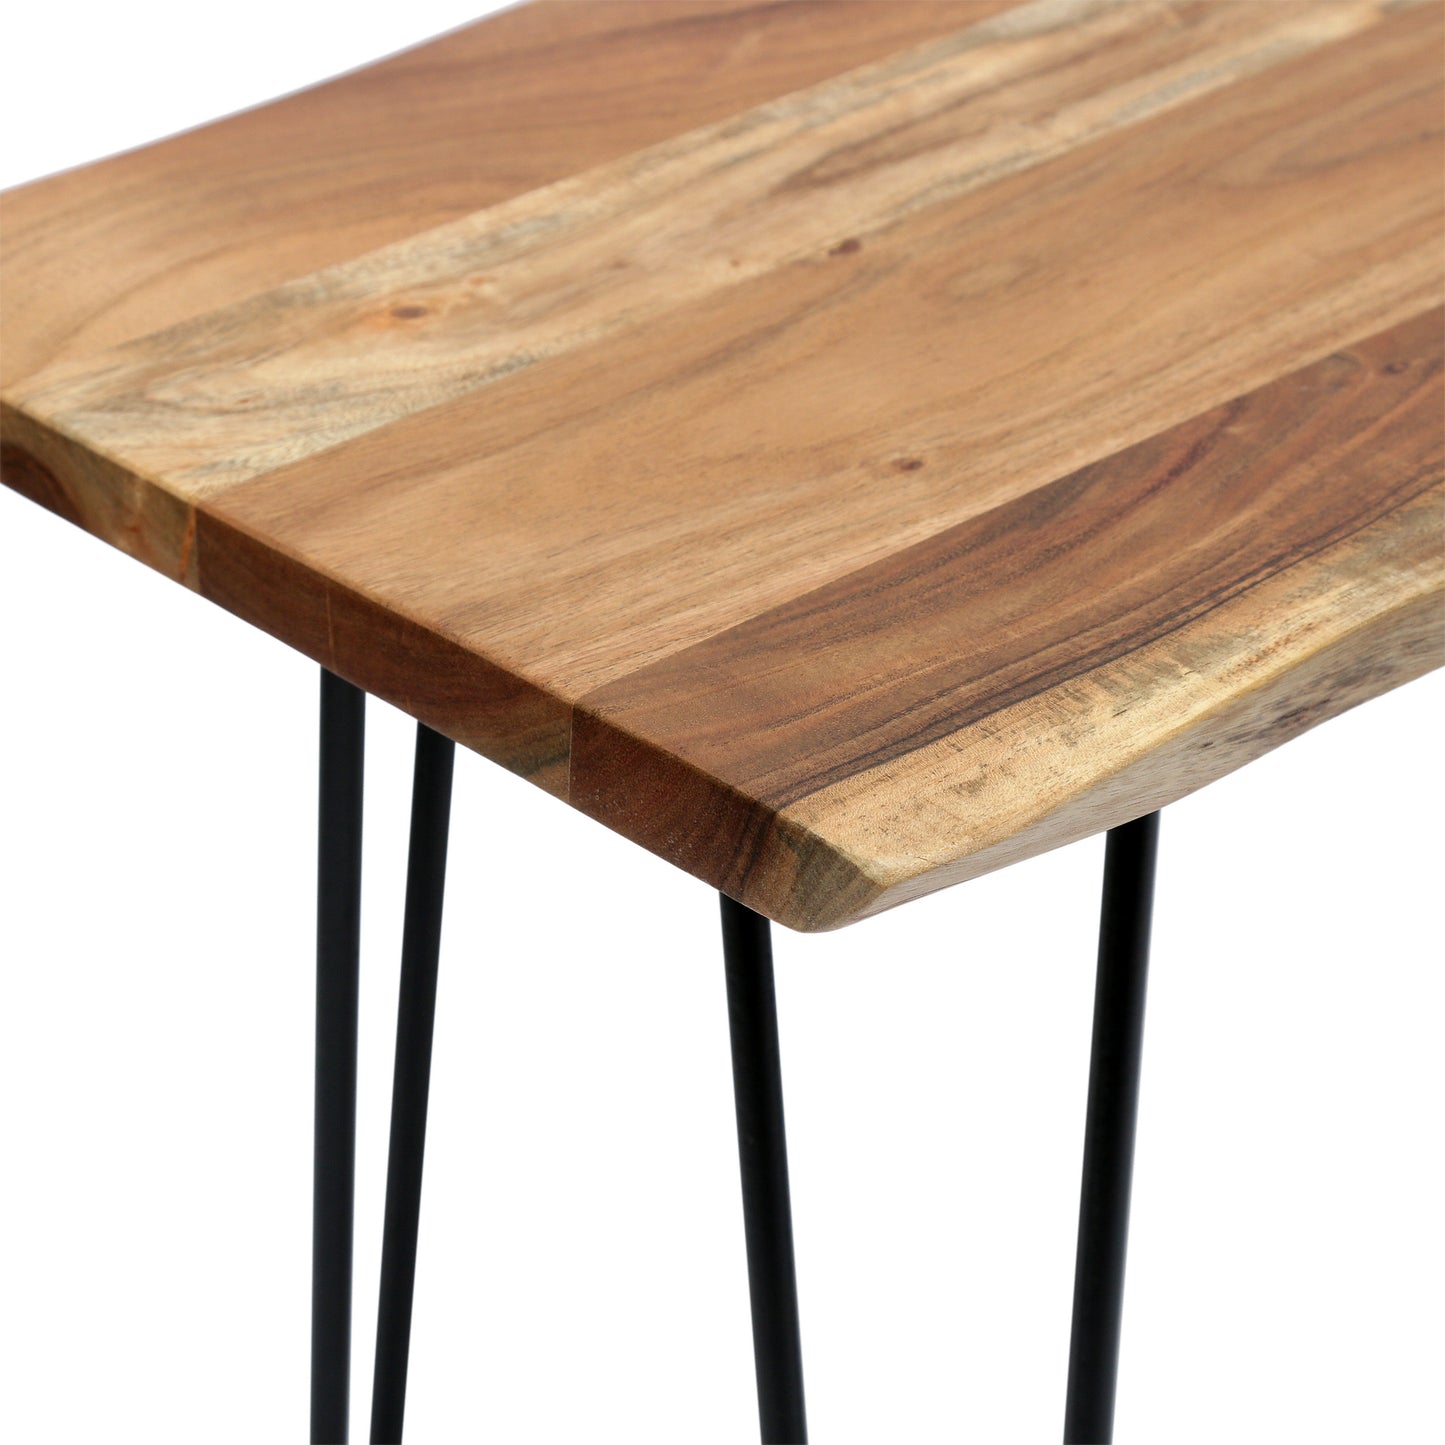 Bullard Modern Industrial Handmade Acacia Wood Dining Bench with Hairpin Legs, Natural and Black